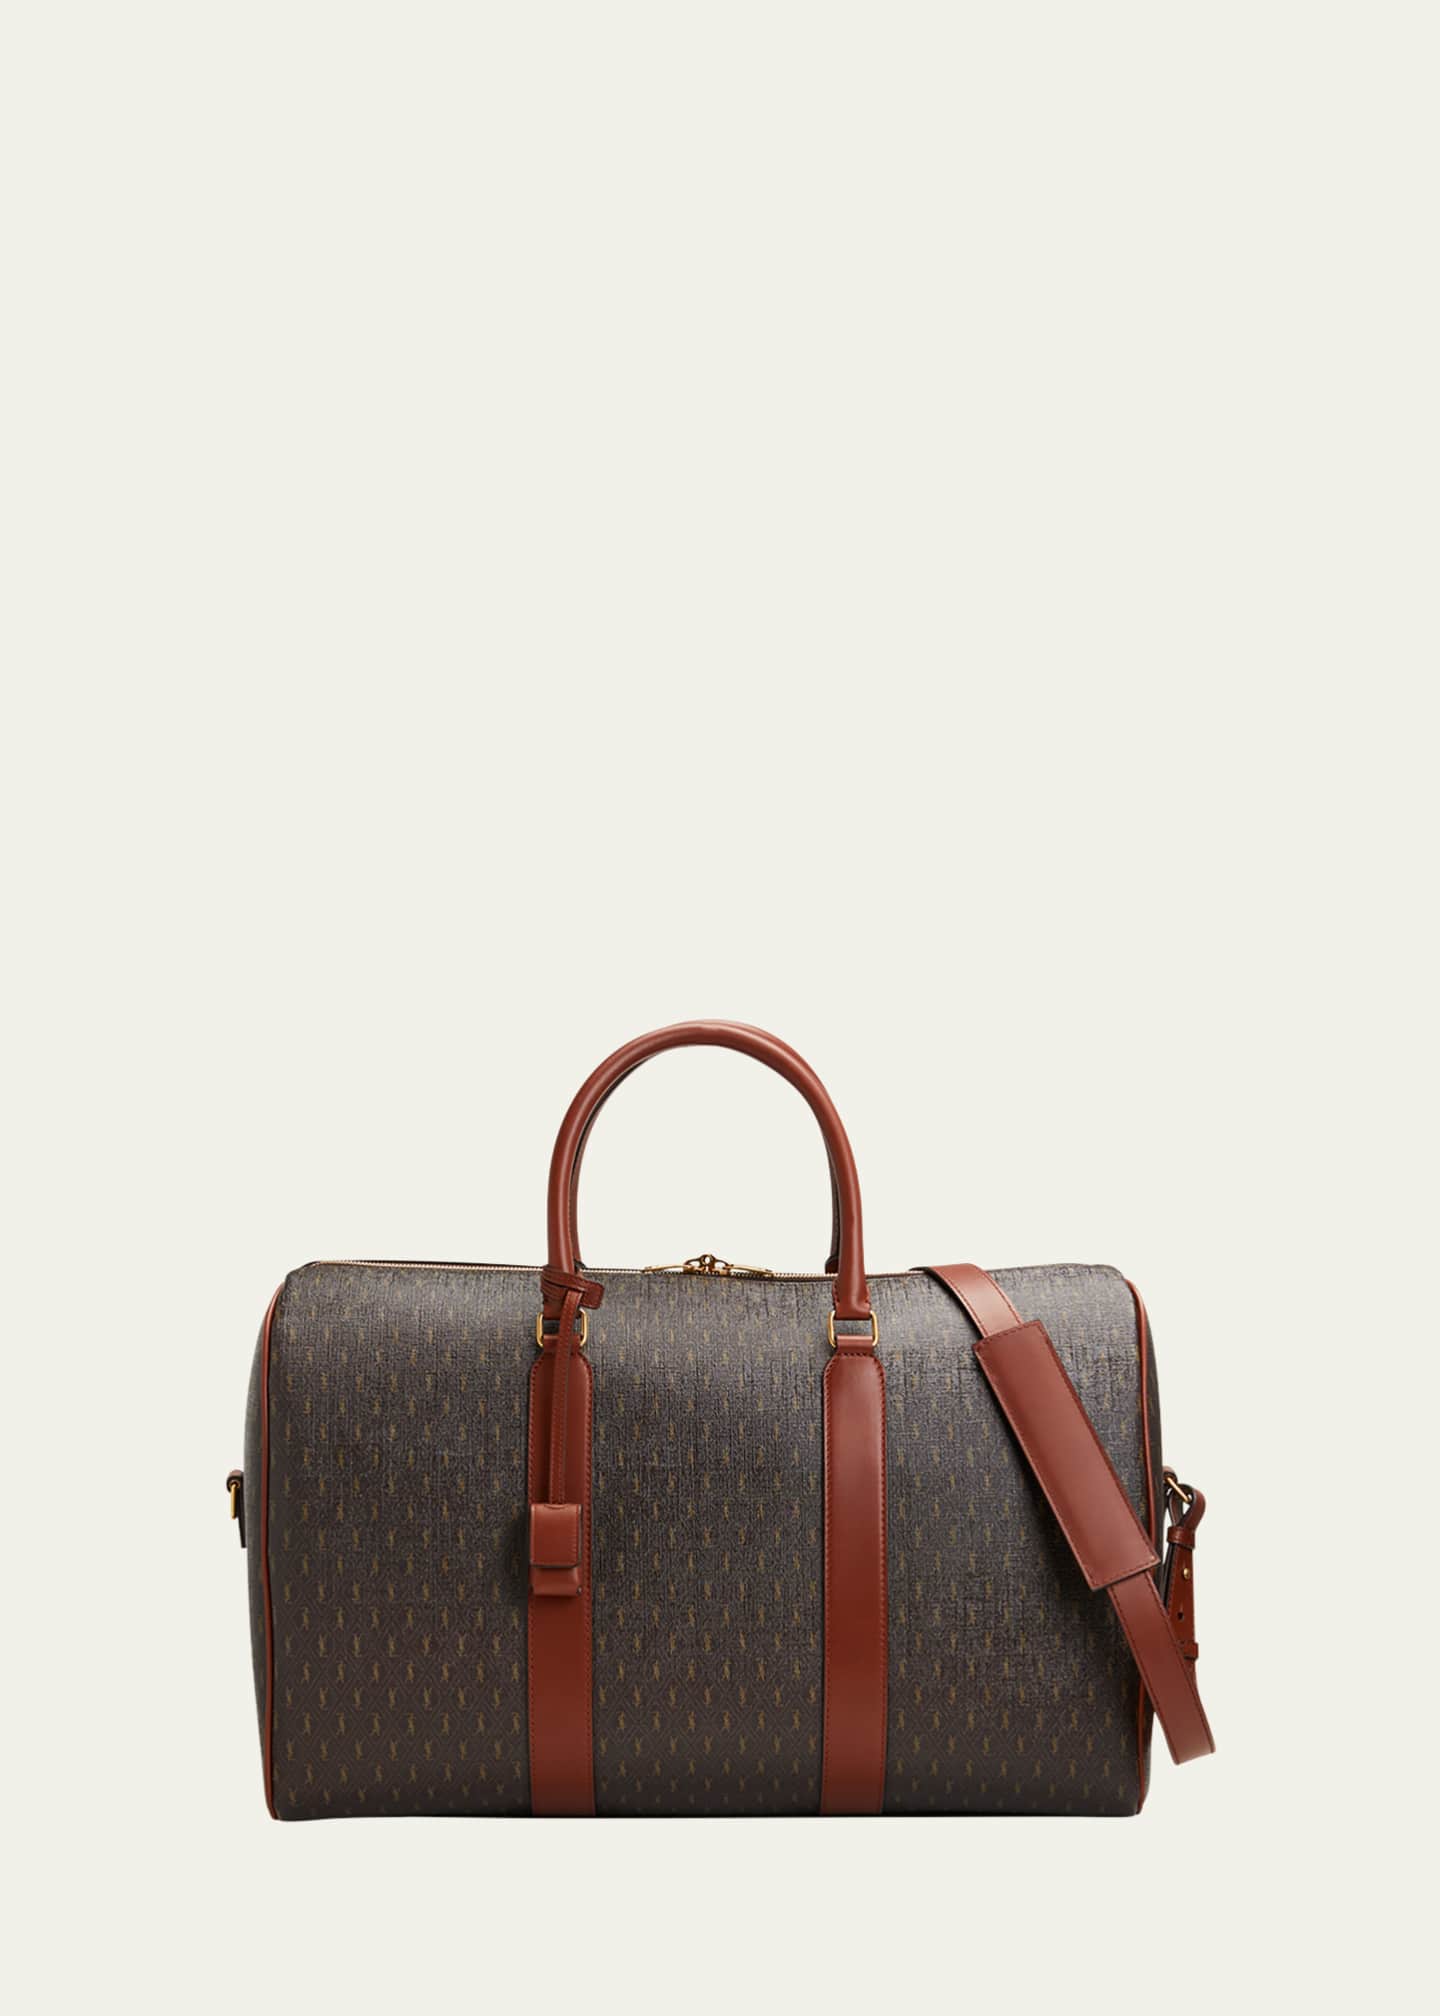 Louis Vuitton NEW Monogram Black Silver Top Handle Men's Travel Duffle Bag